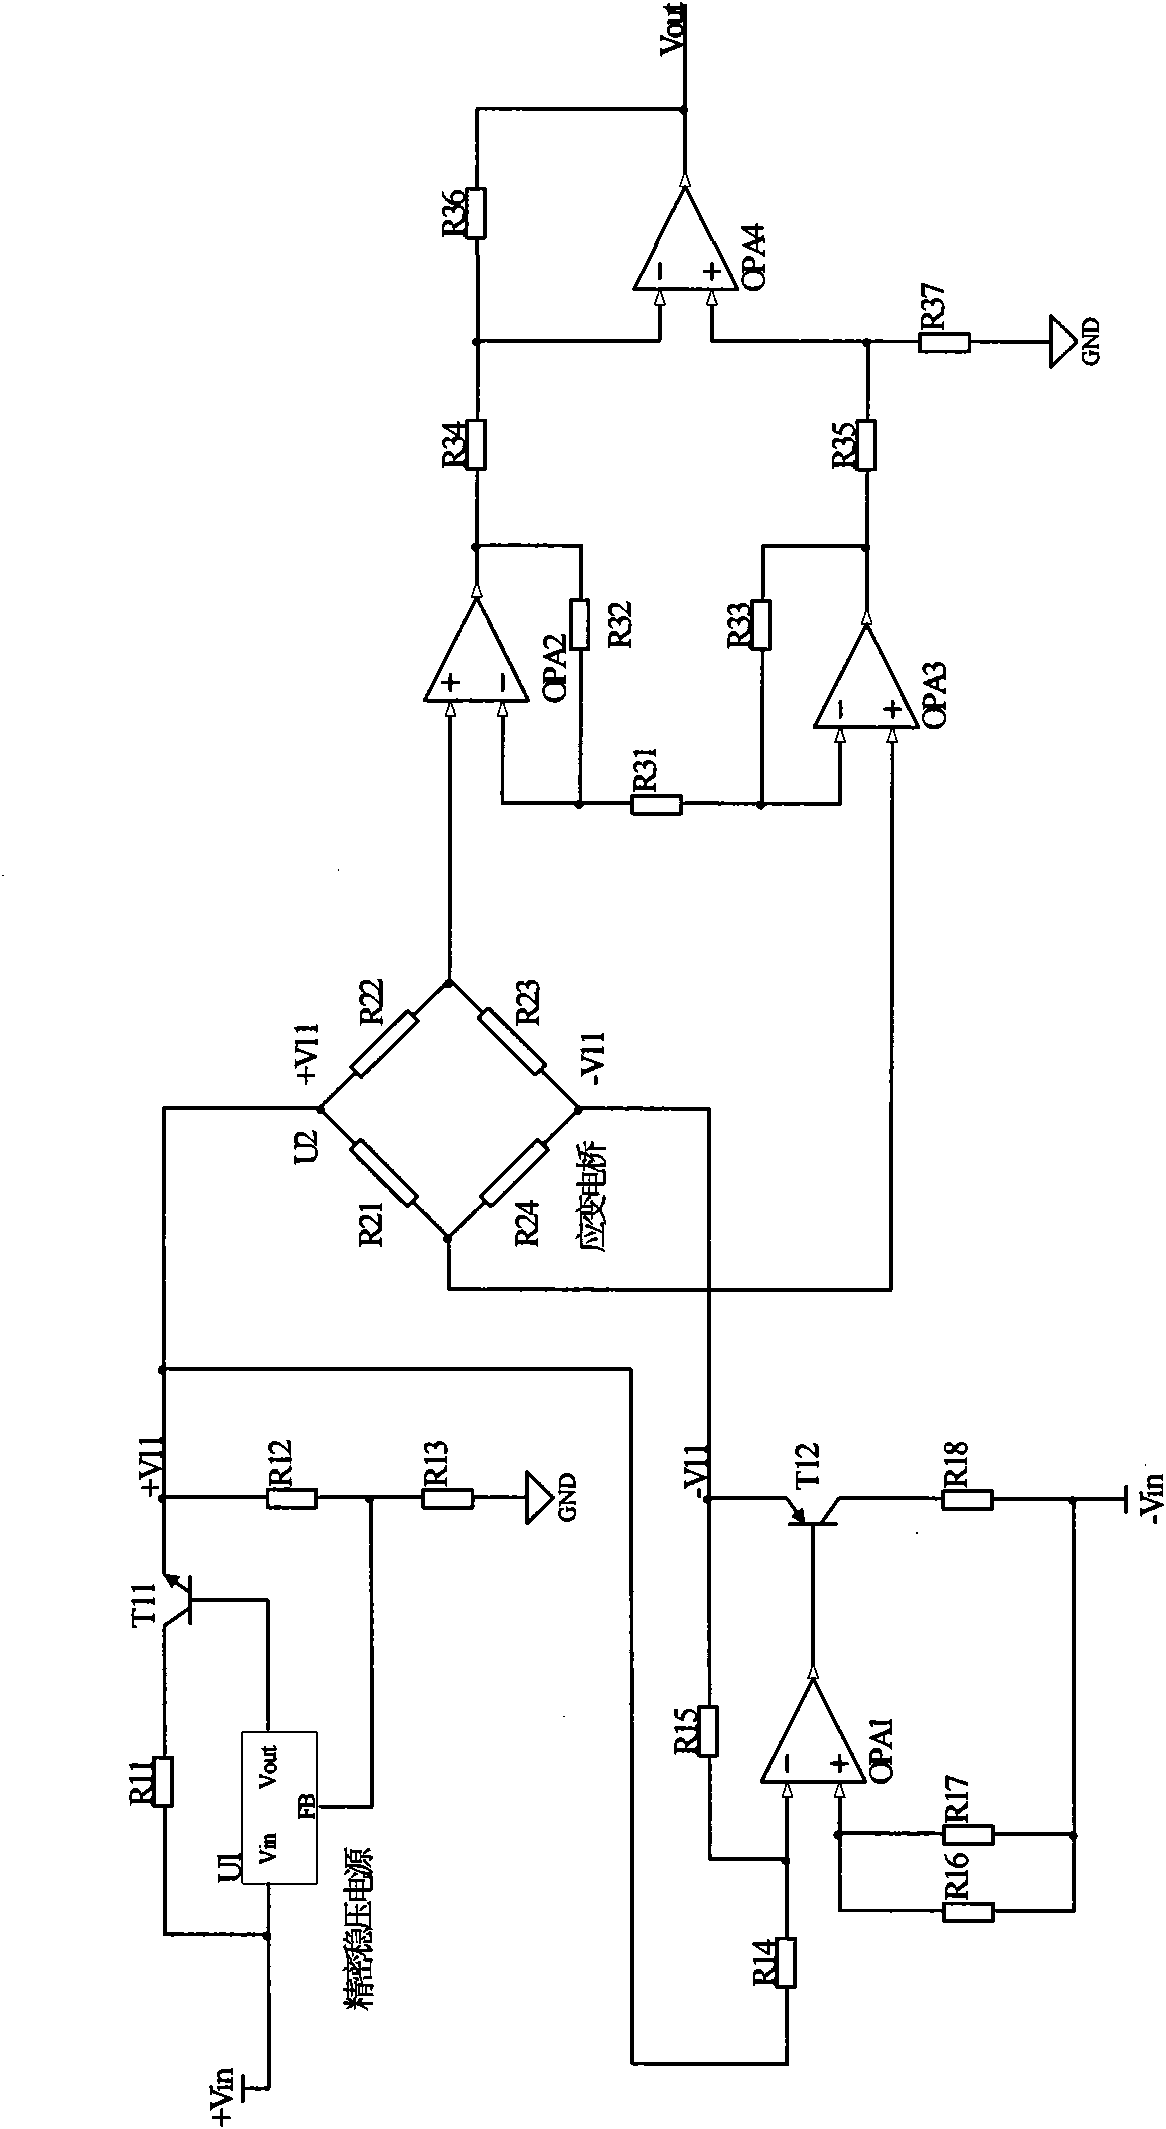 Detection circuit for non-common mode voltage strain bridge signal